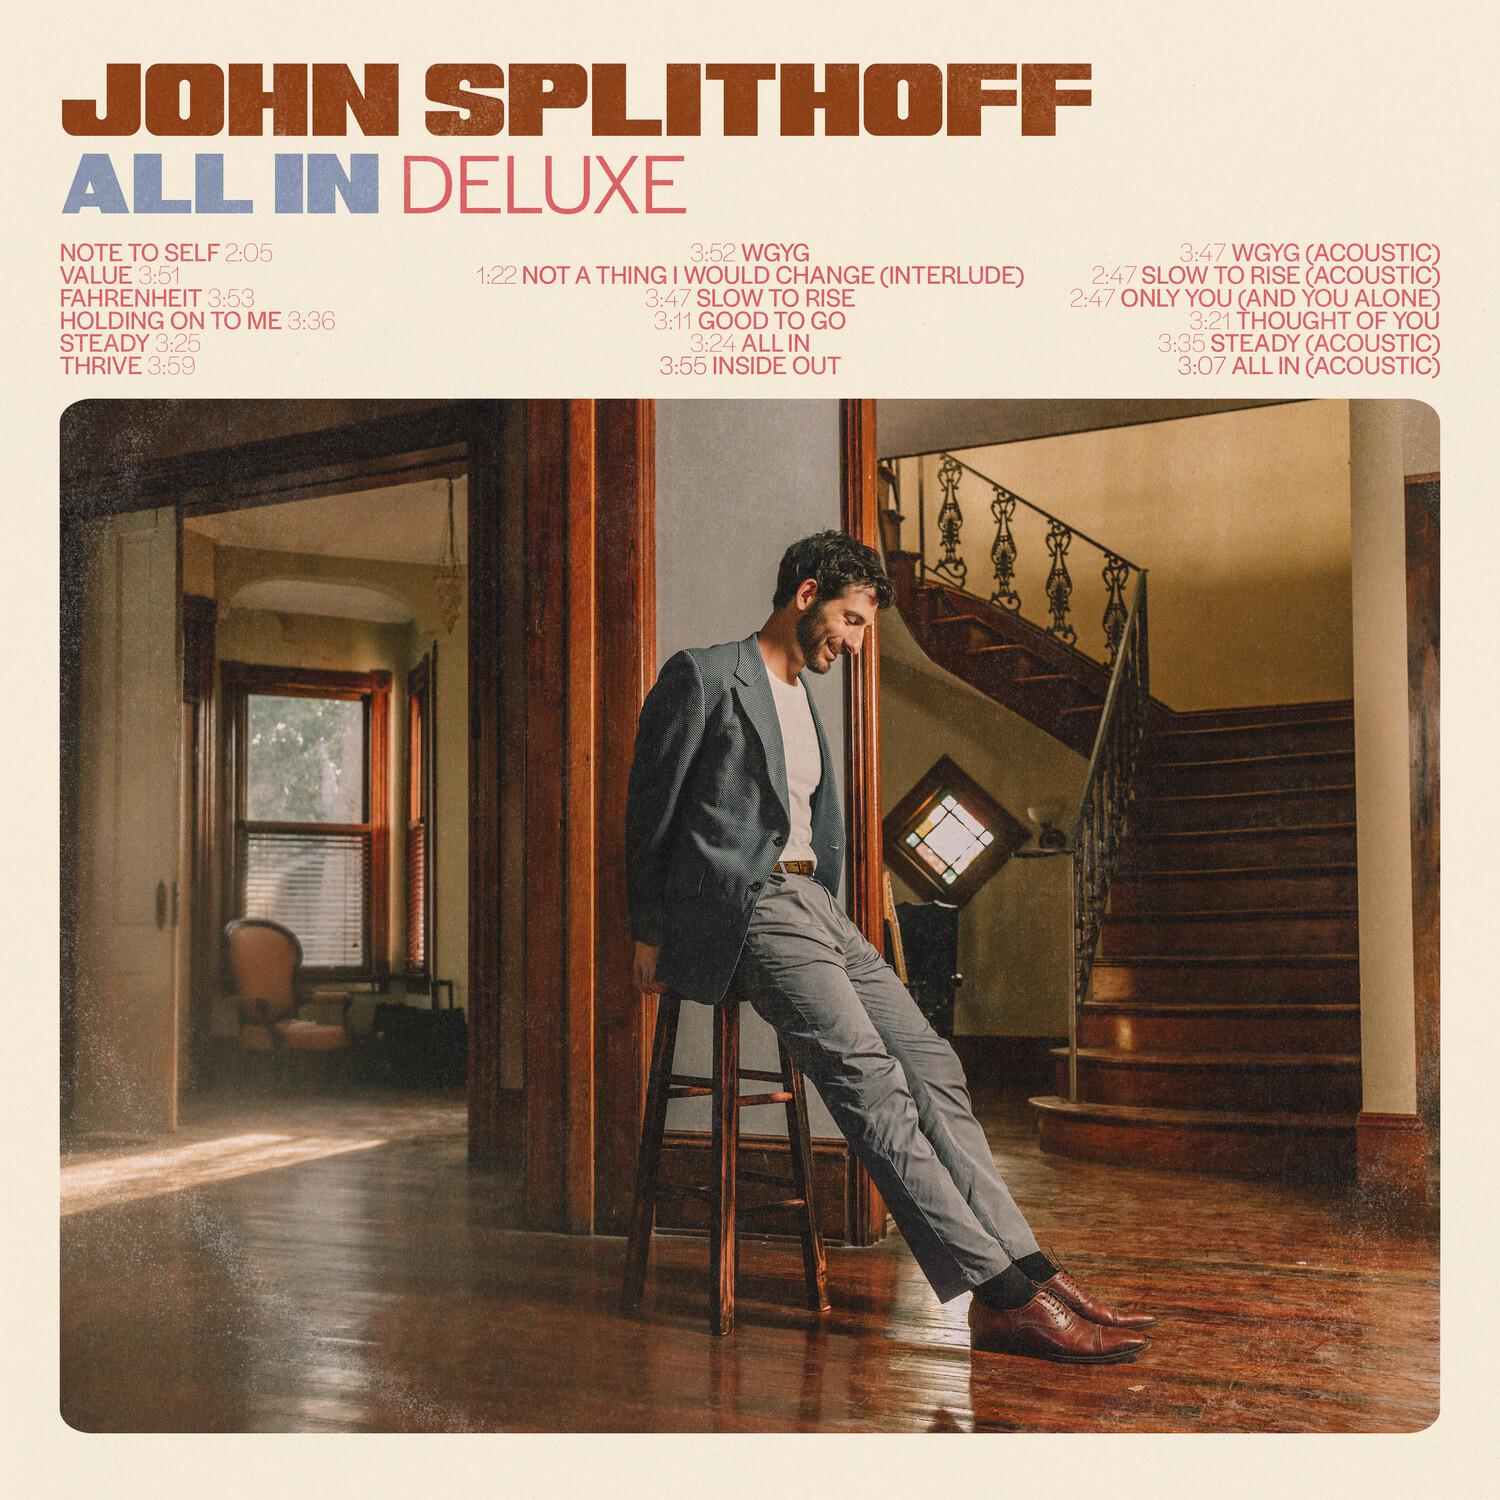 John Splithoff - Not A Thing I Would Change (Interlude)